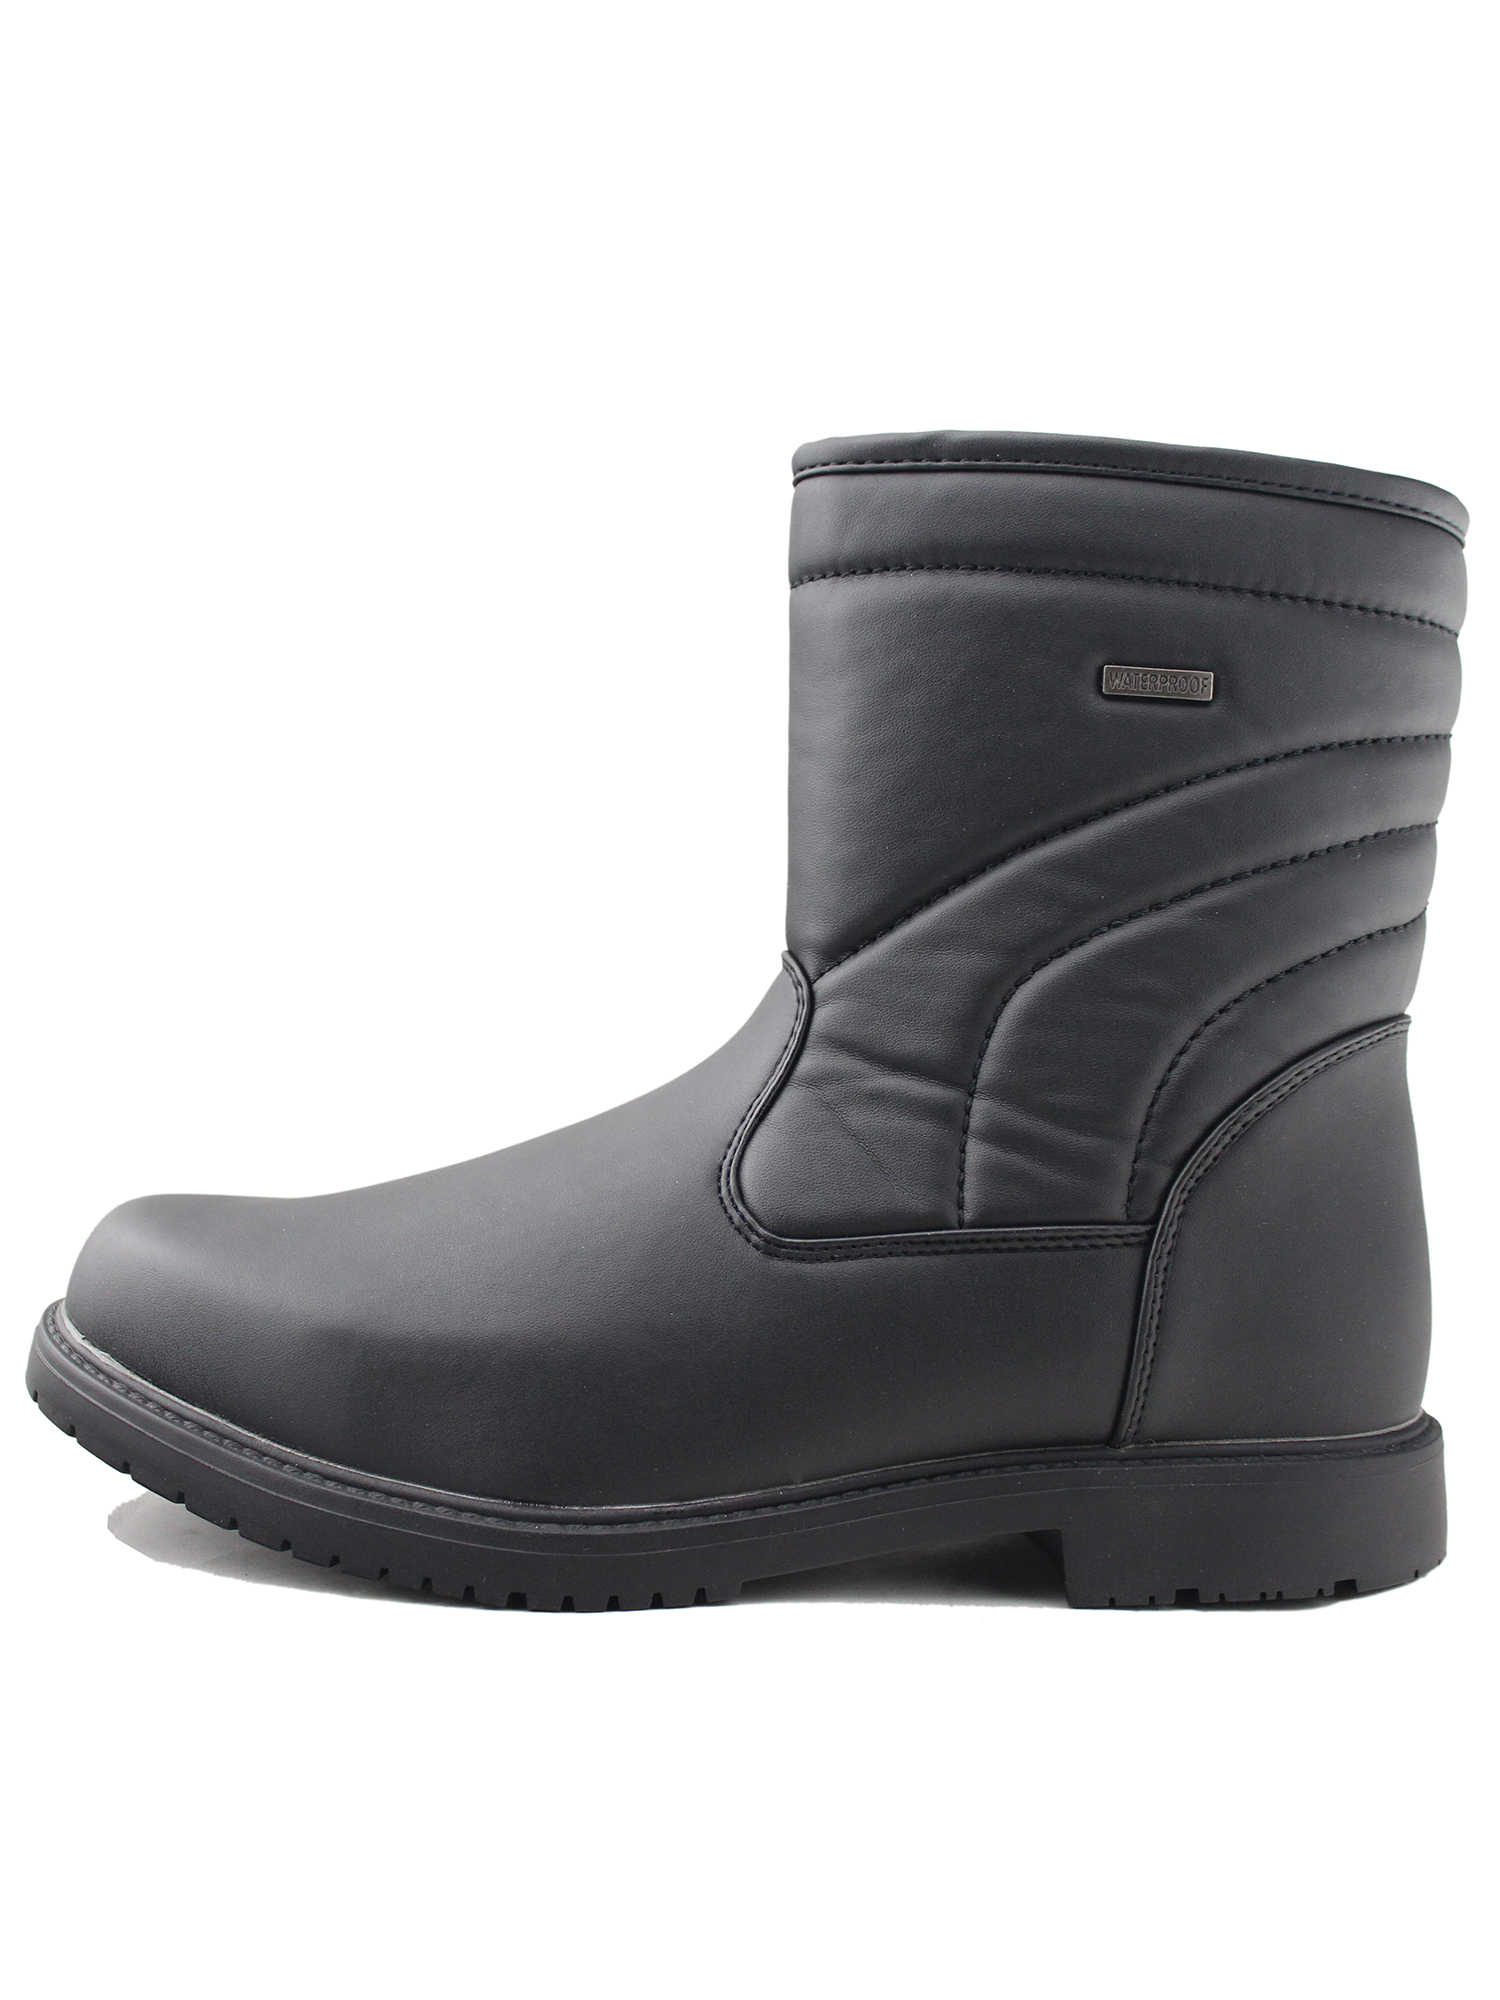 Tanleewa Men's Winter Boots Fur Lining Waterproof Non Slip Snow Boots Side Zipper Shoe Size 7 - image 3 of 6